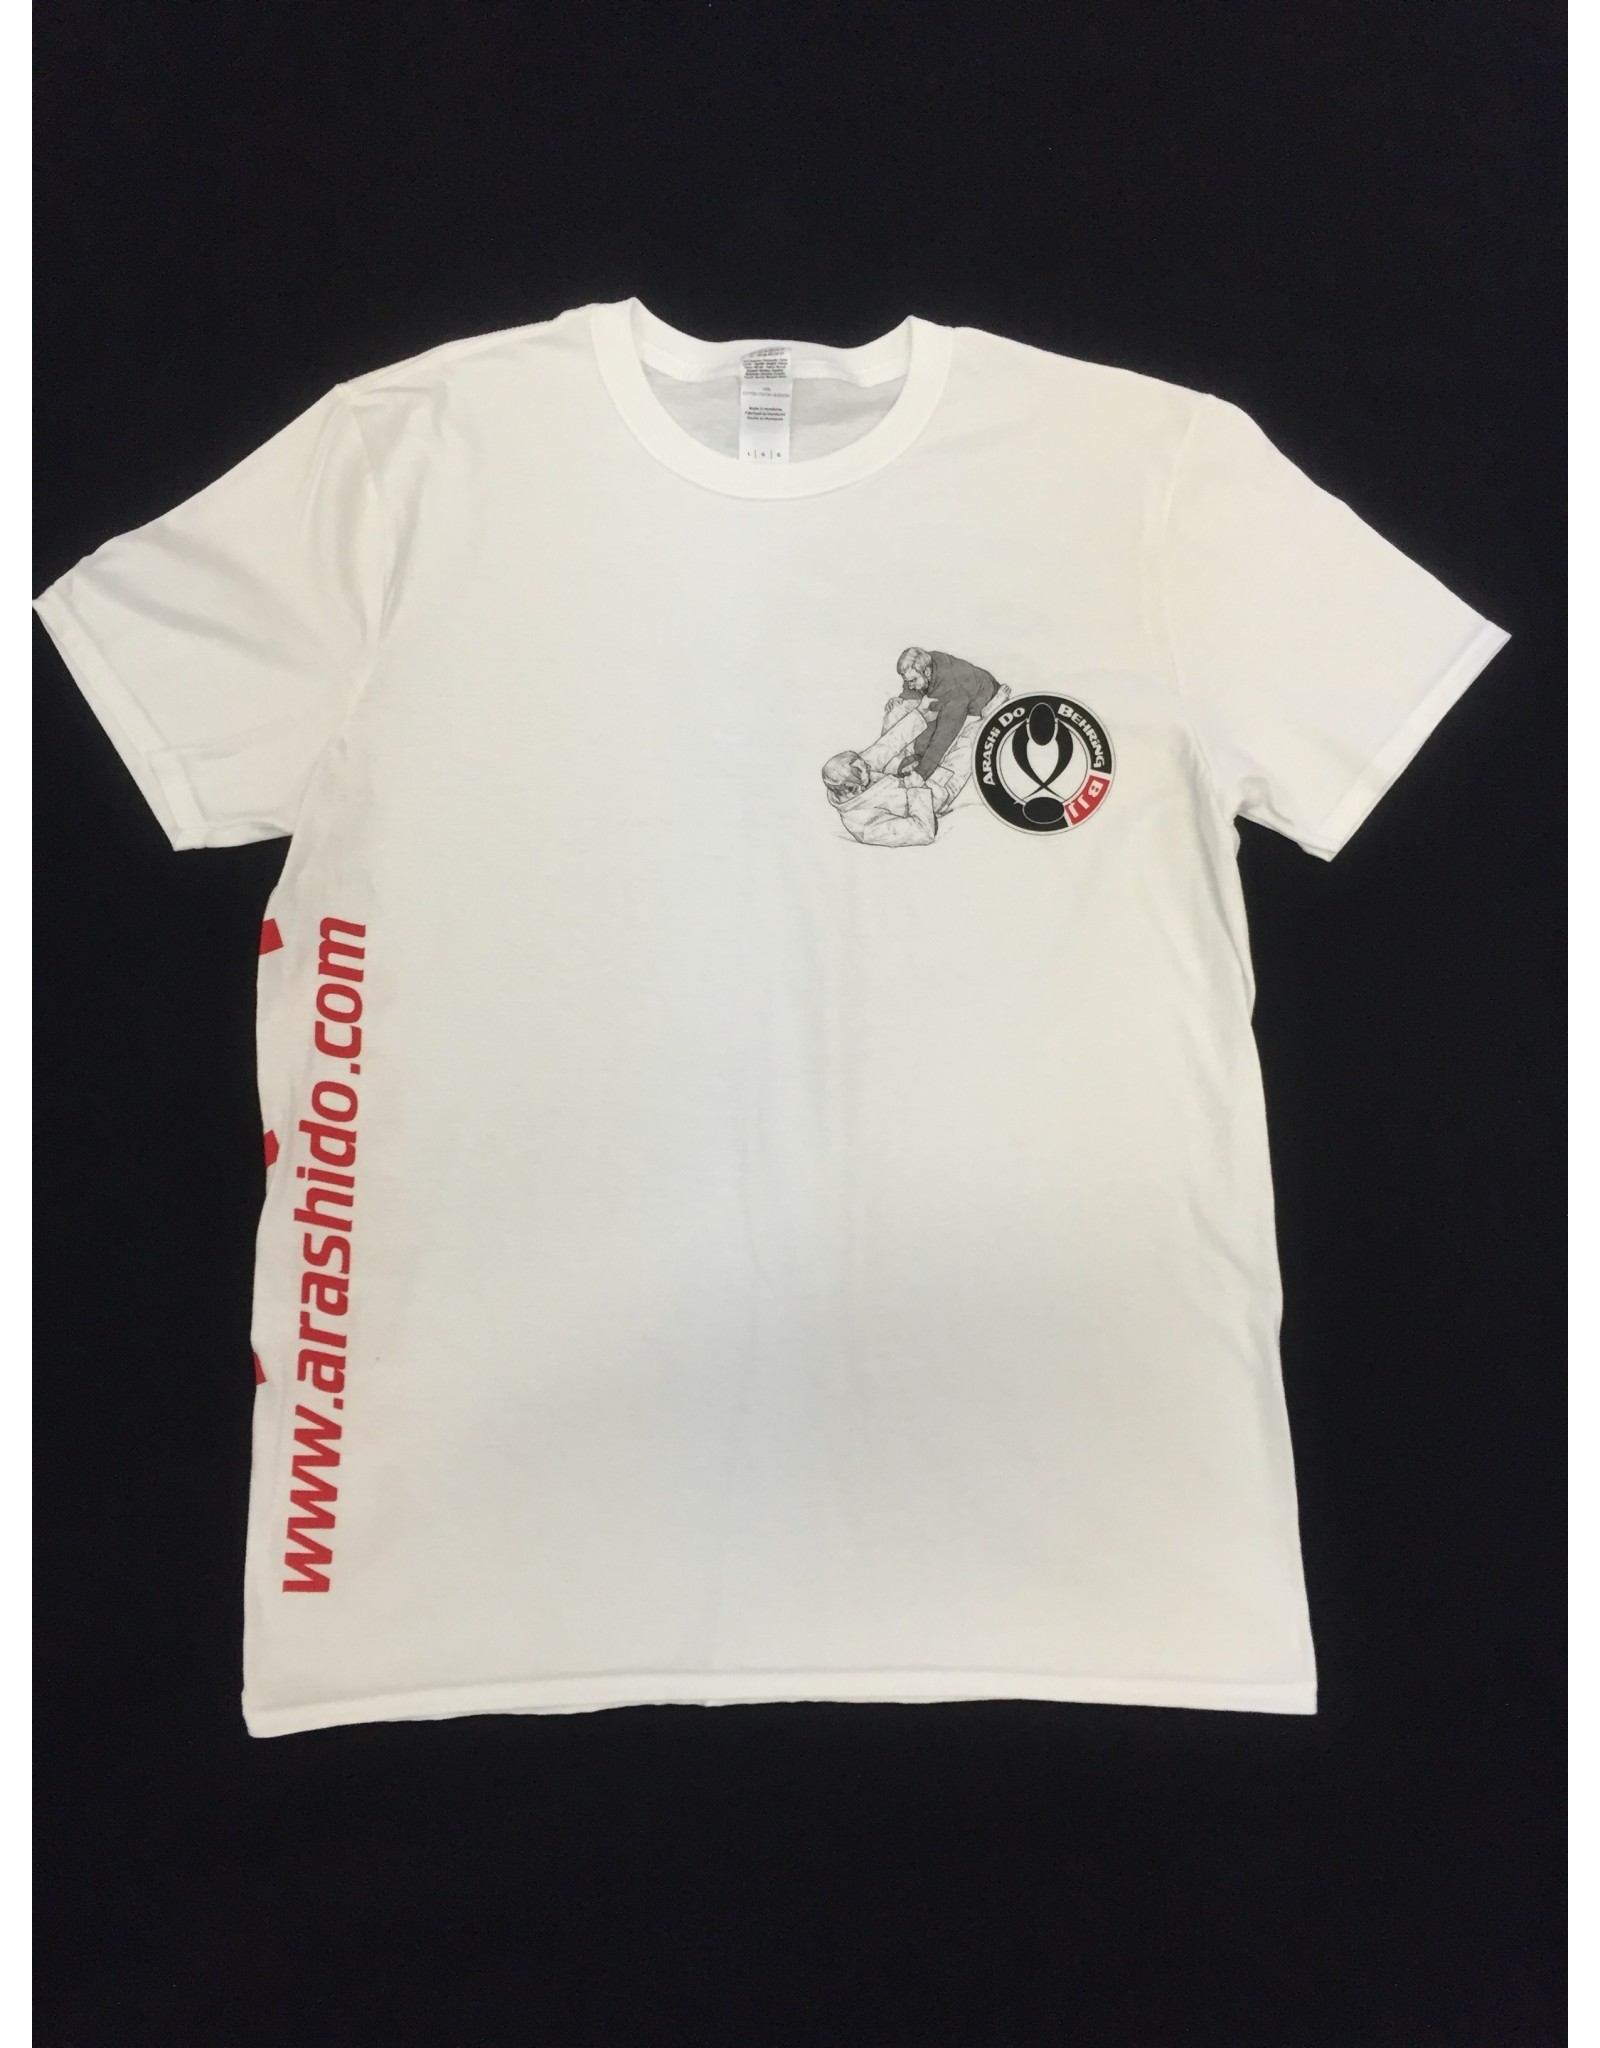 Arashi-Do Behring Shirts White Sylvio Behring Image